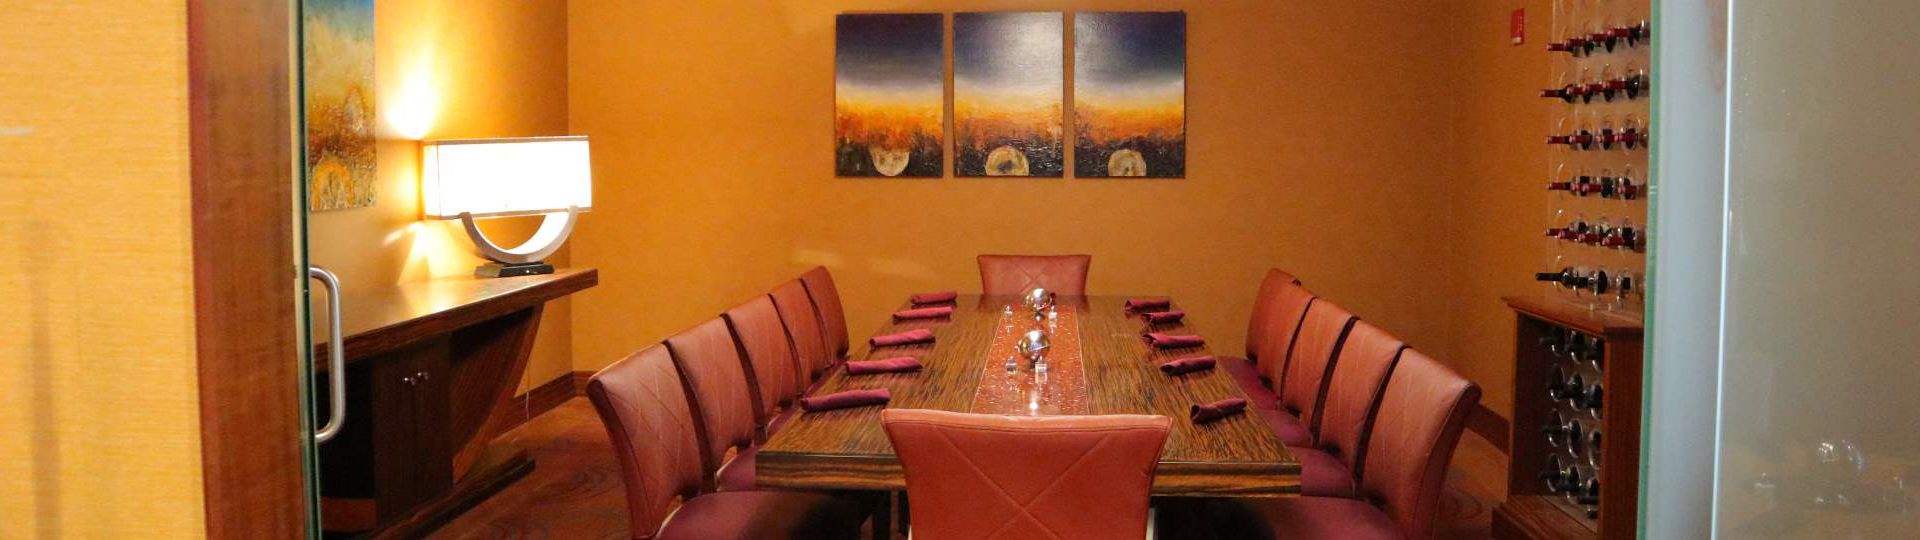 Luna Restaurant & Lounge, Florida - Private Dining